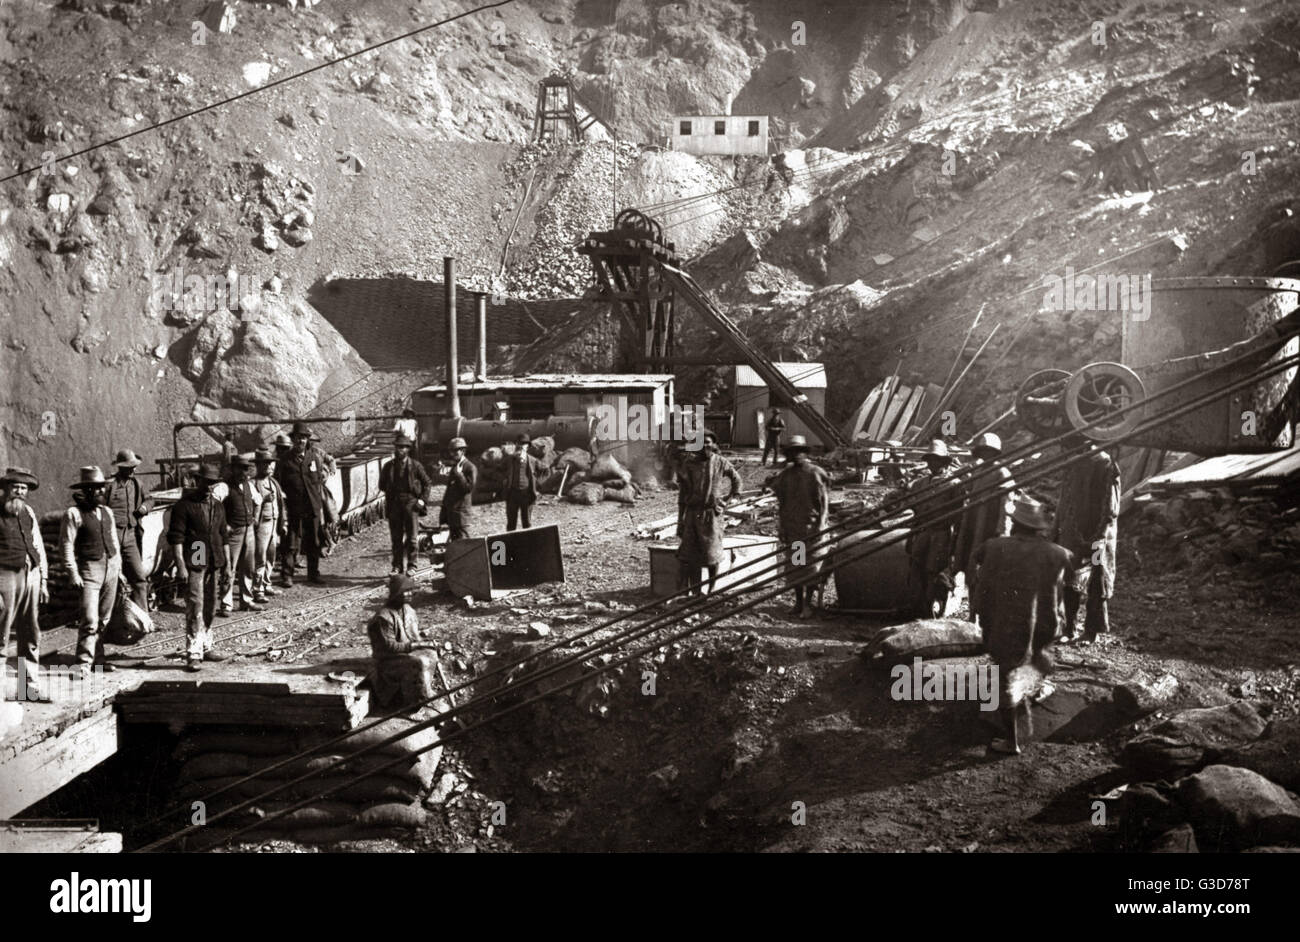 Kimberley, South Africa, circa 1888 - Mining Stock Photo